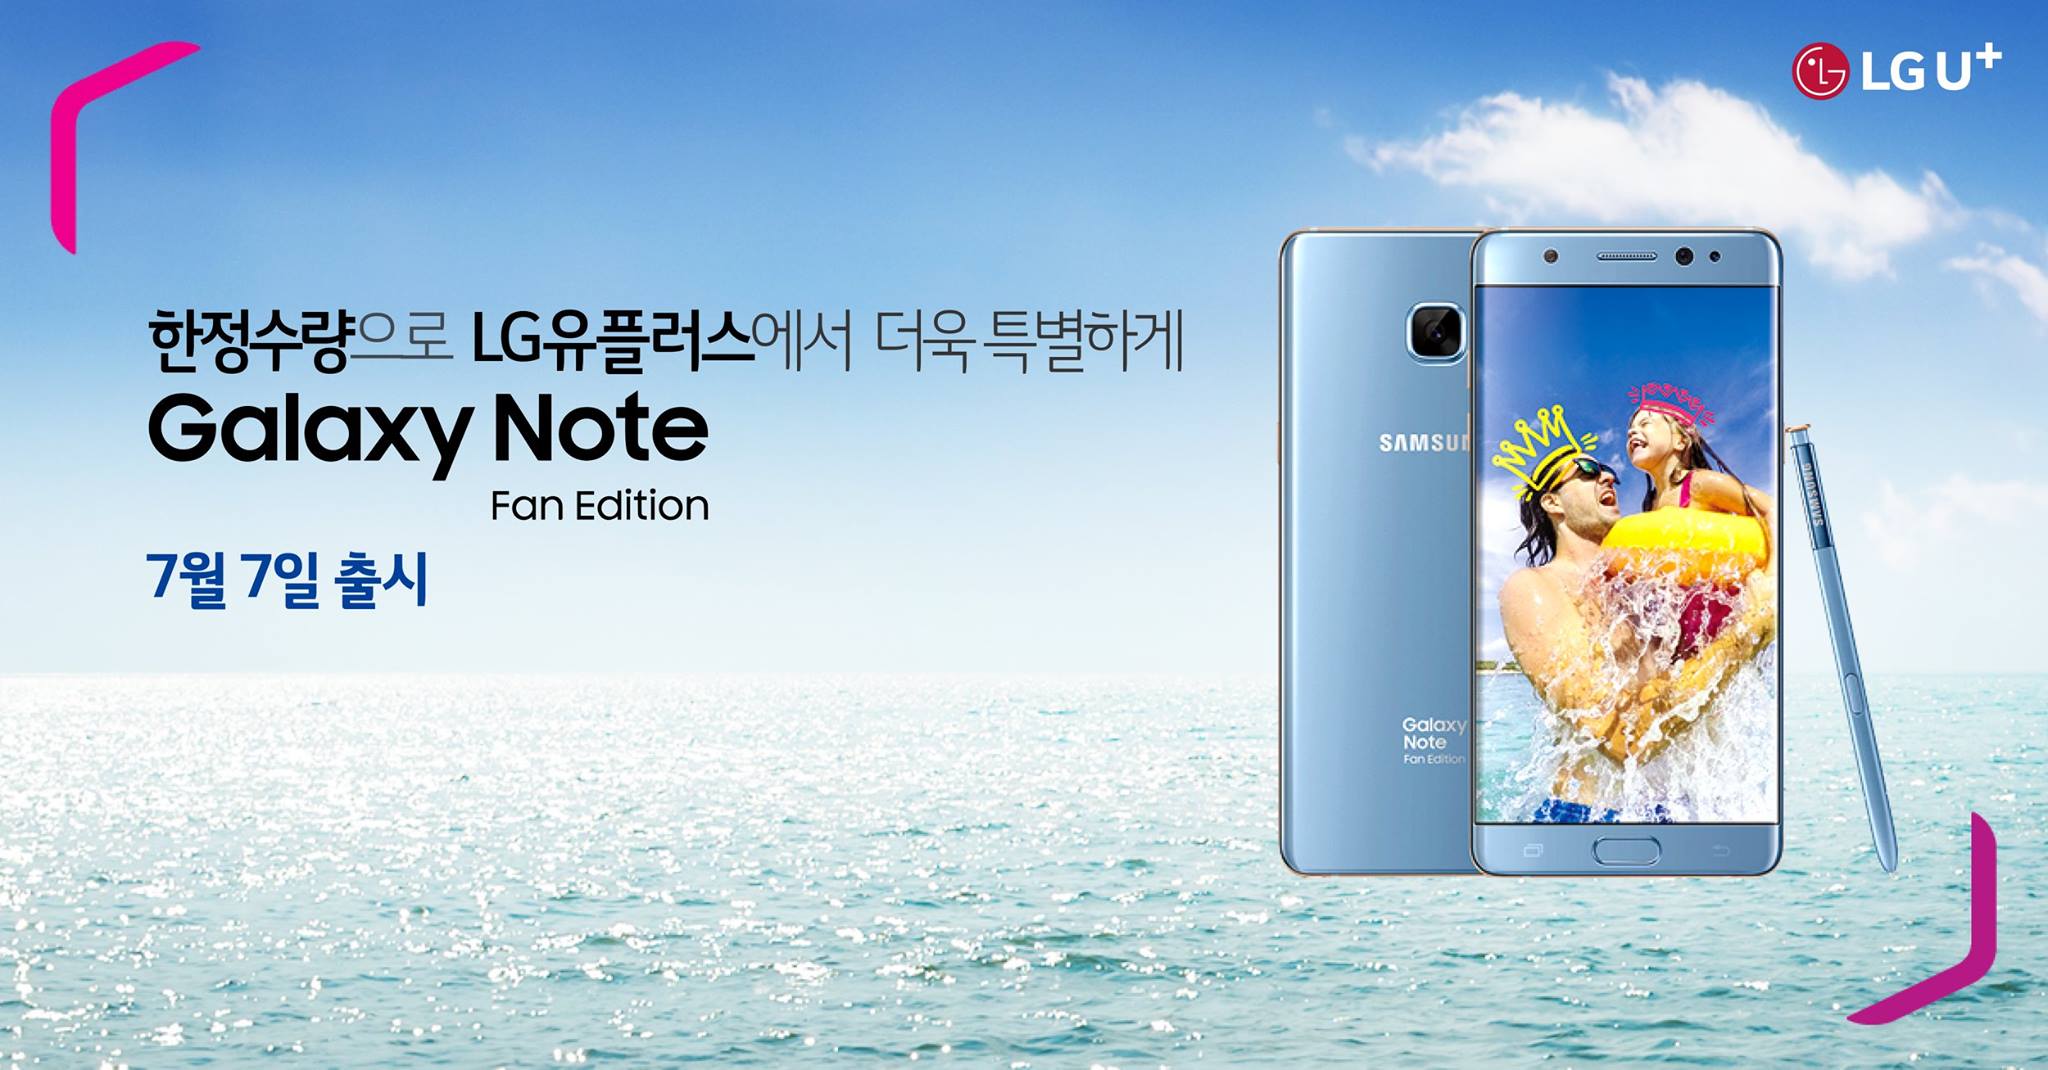 Galaxy note edition. Galaxy Note Fan Edition. Самсунг эдитион. Samsung выпустила Note Fan Edition. Реклама Samsung Note.